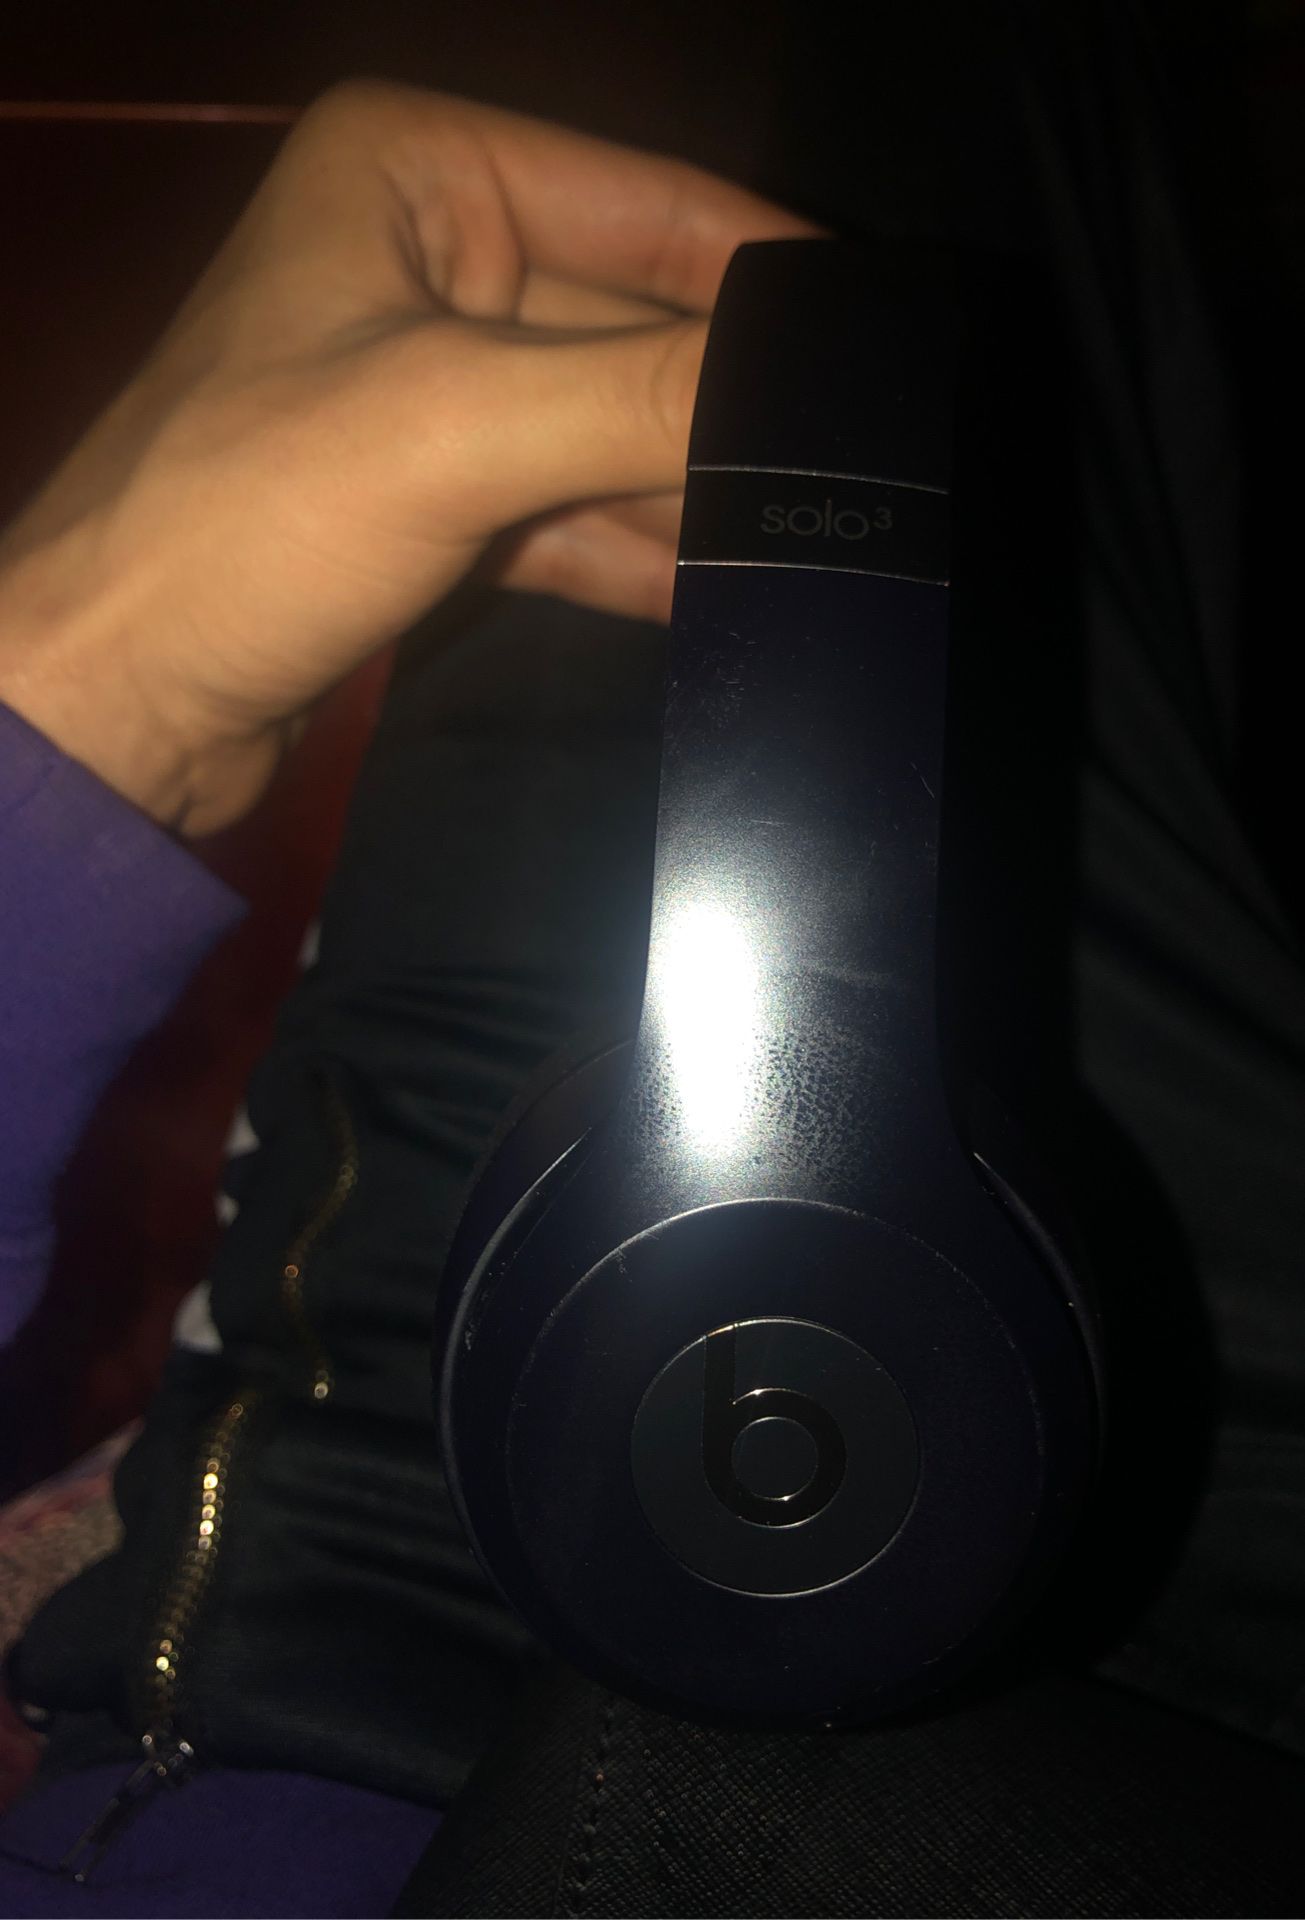 Beats Solo3’s Bluetooth headphones